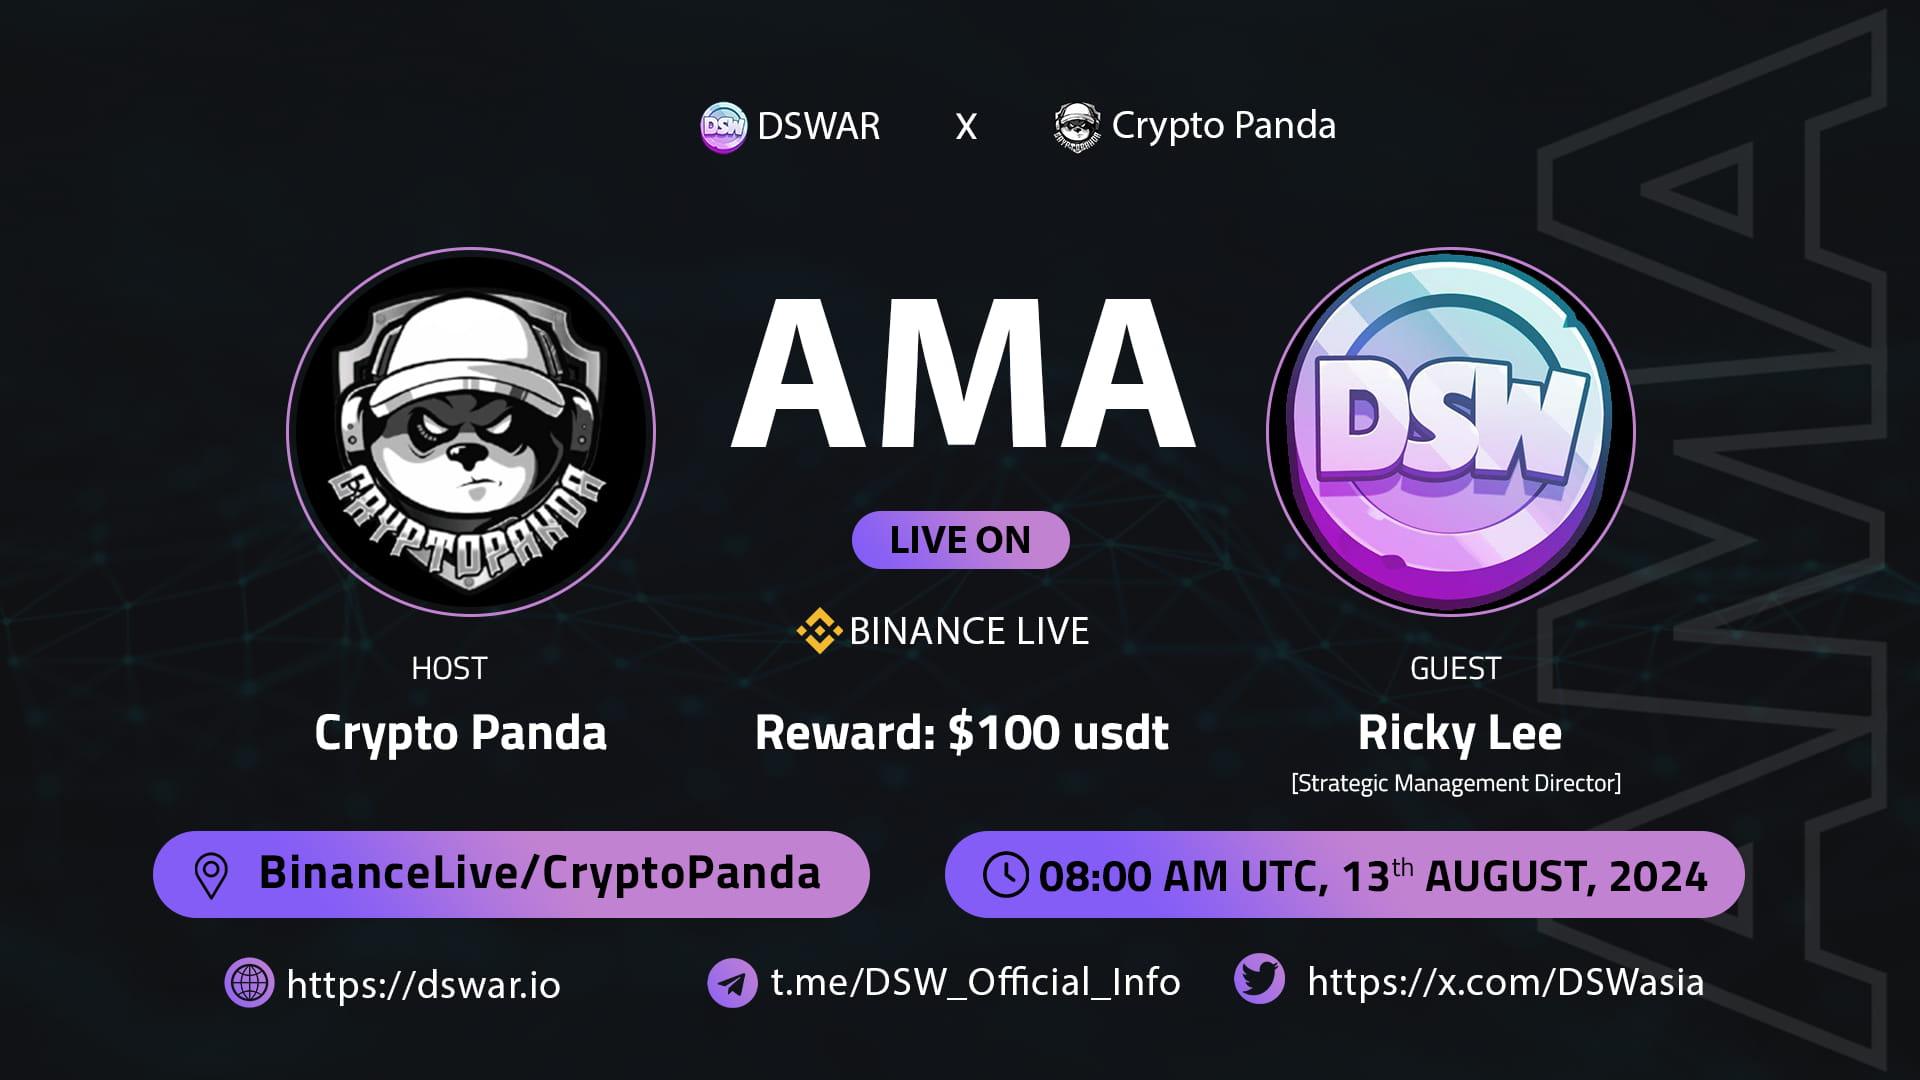 Crypto Panda presents AMA with DSWAR